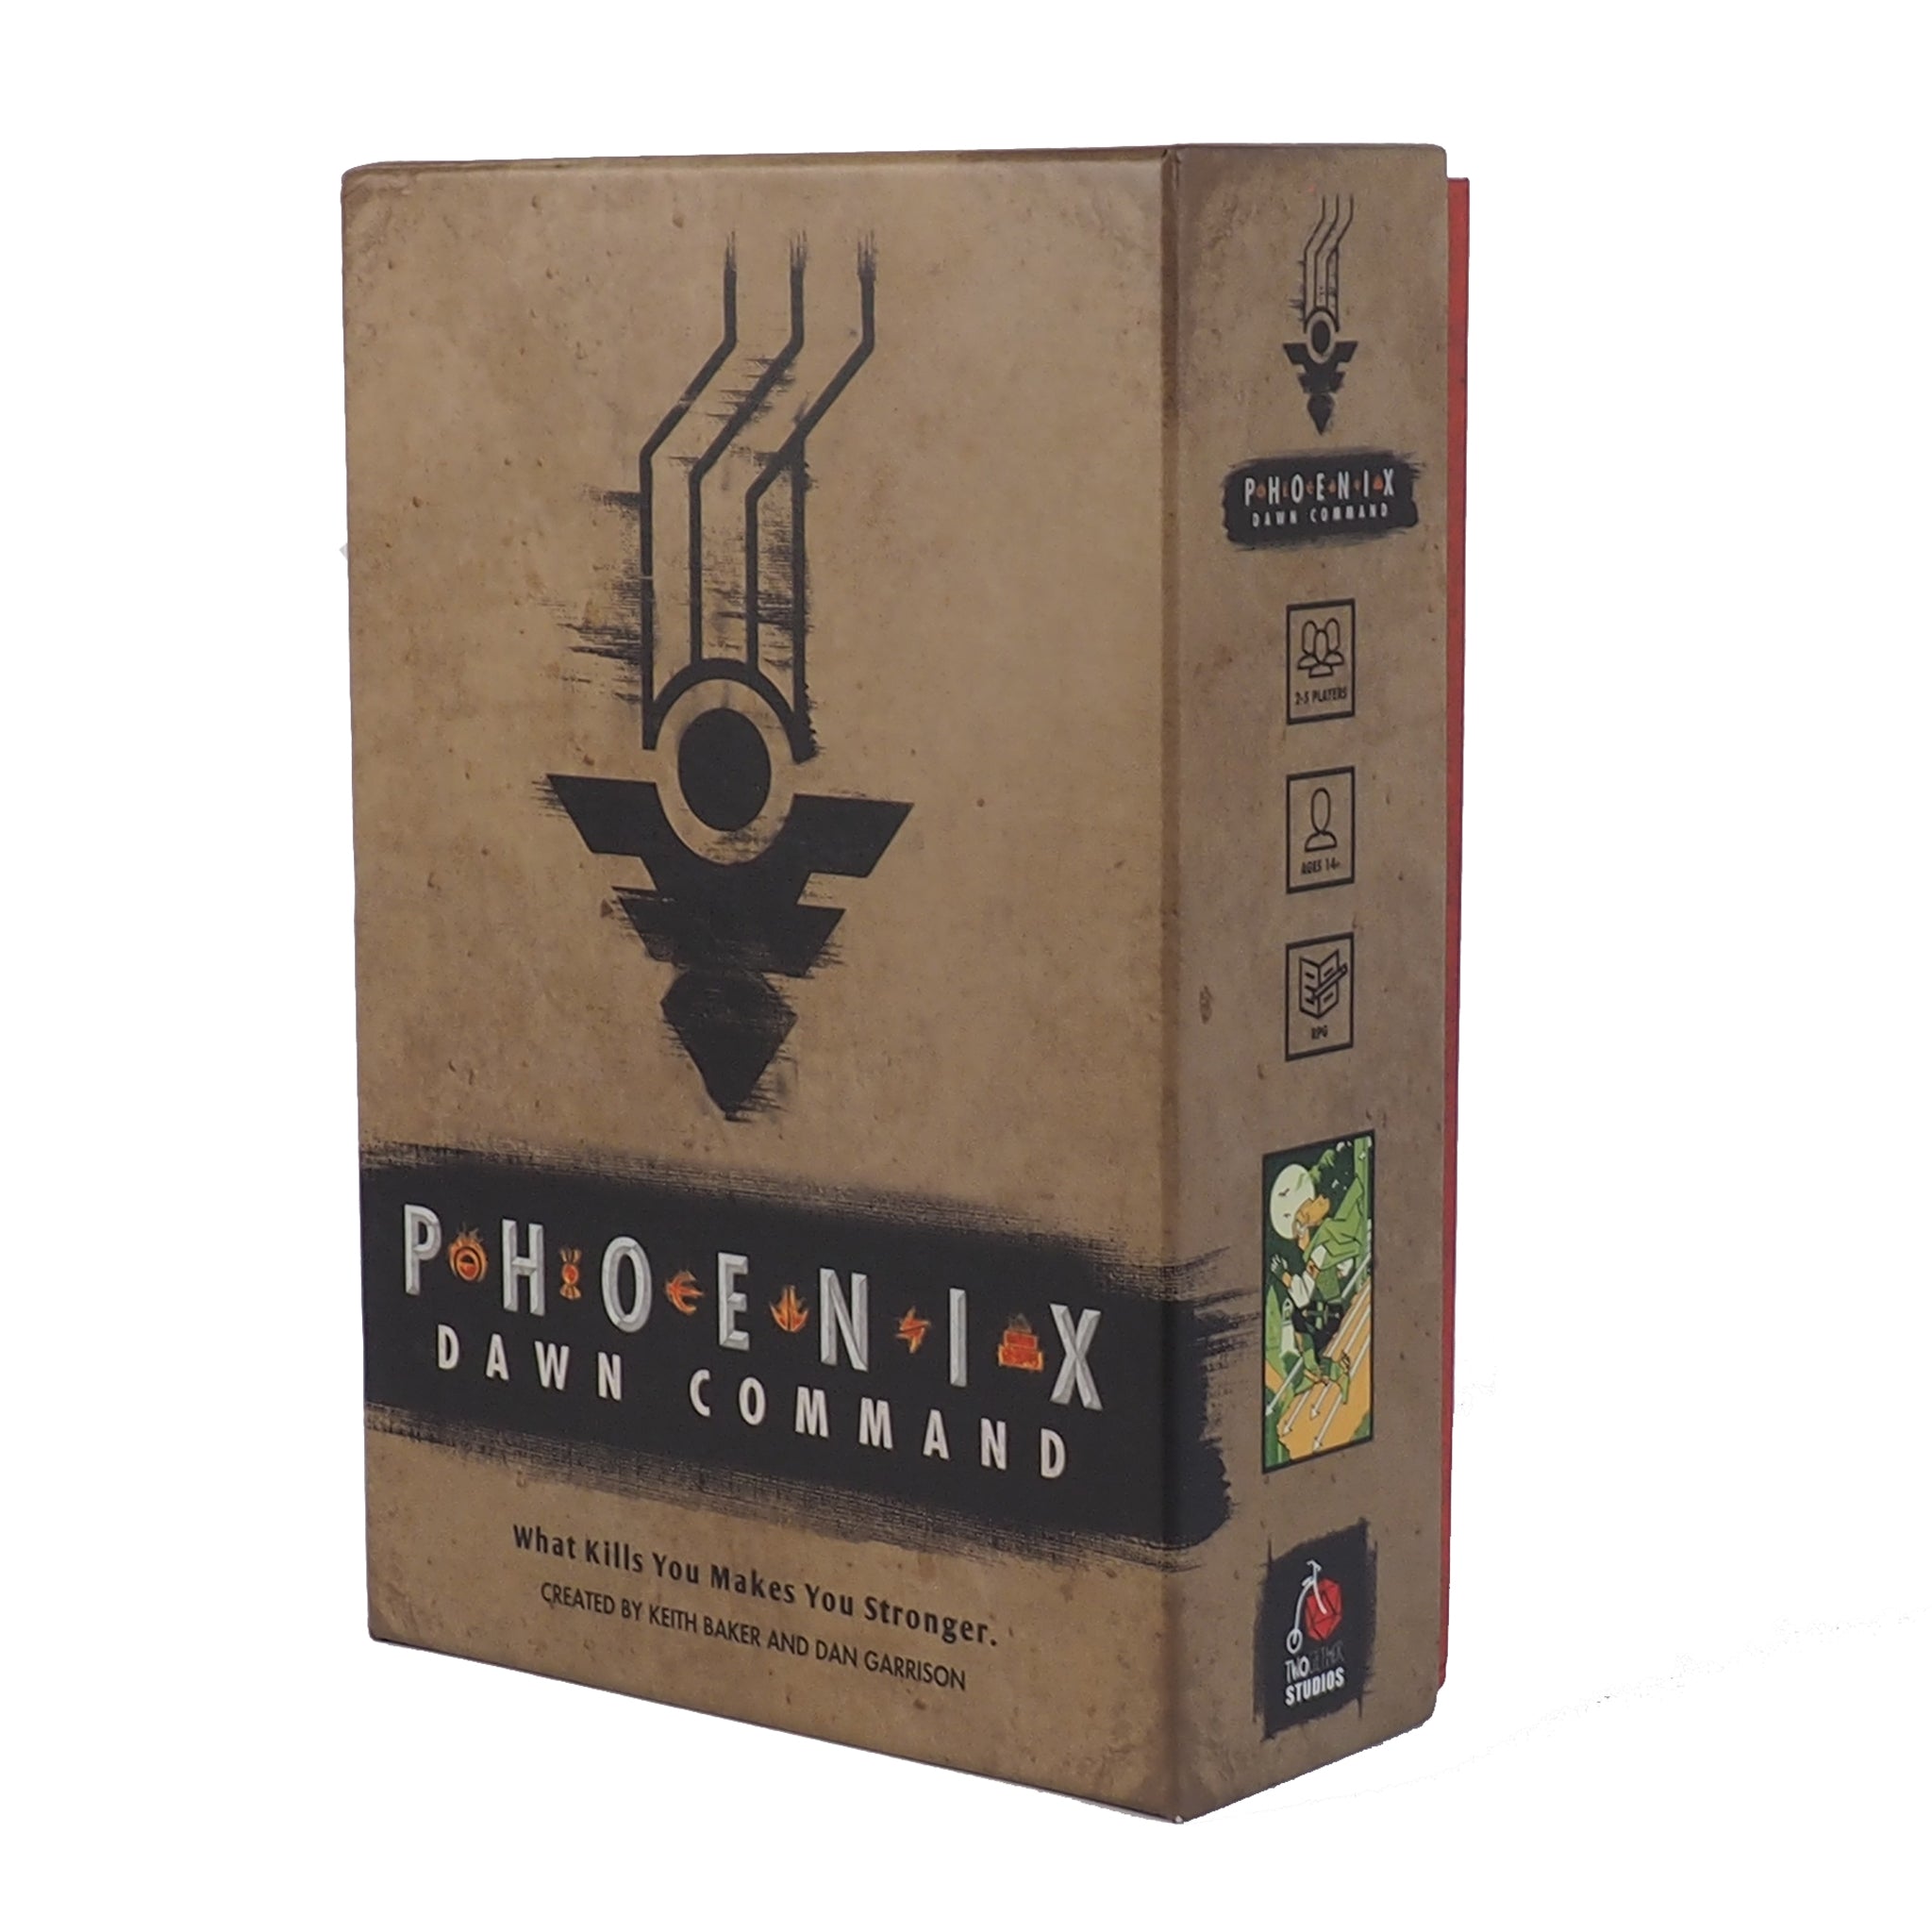 Phoenix Command: Russian Roulette (Leading Edge Games